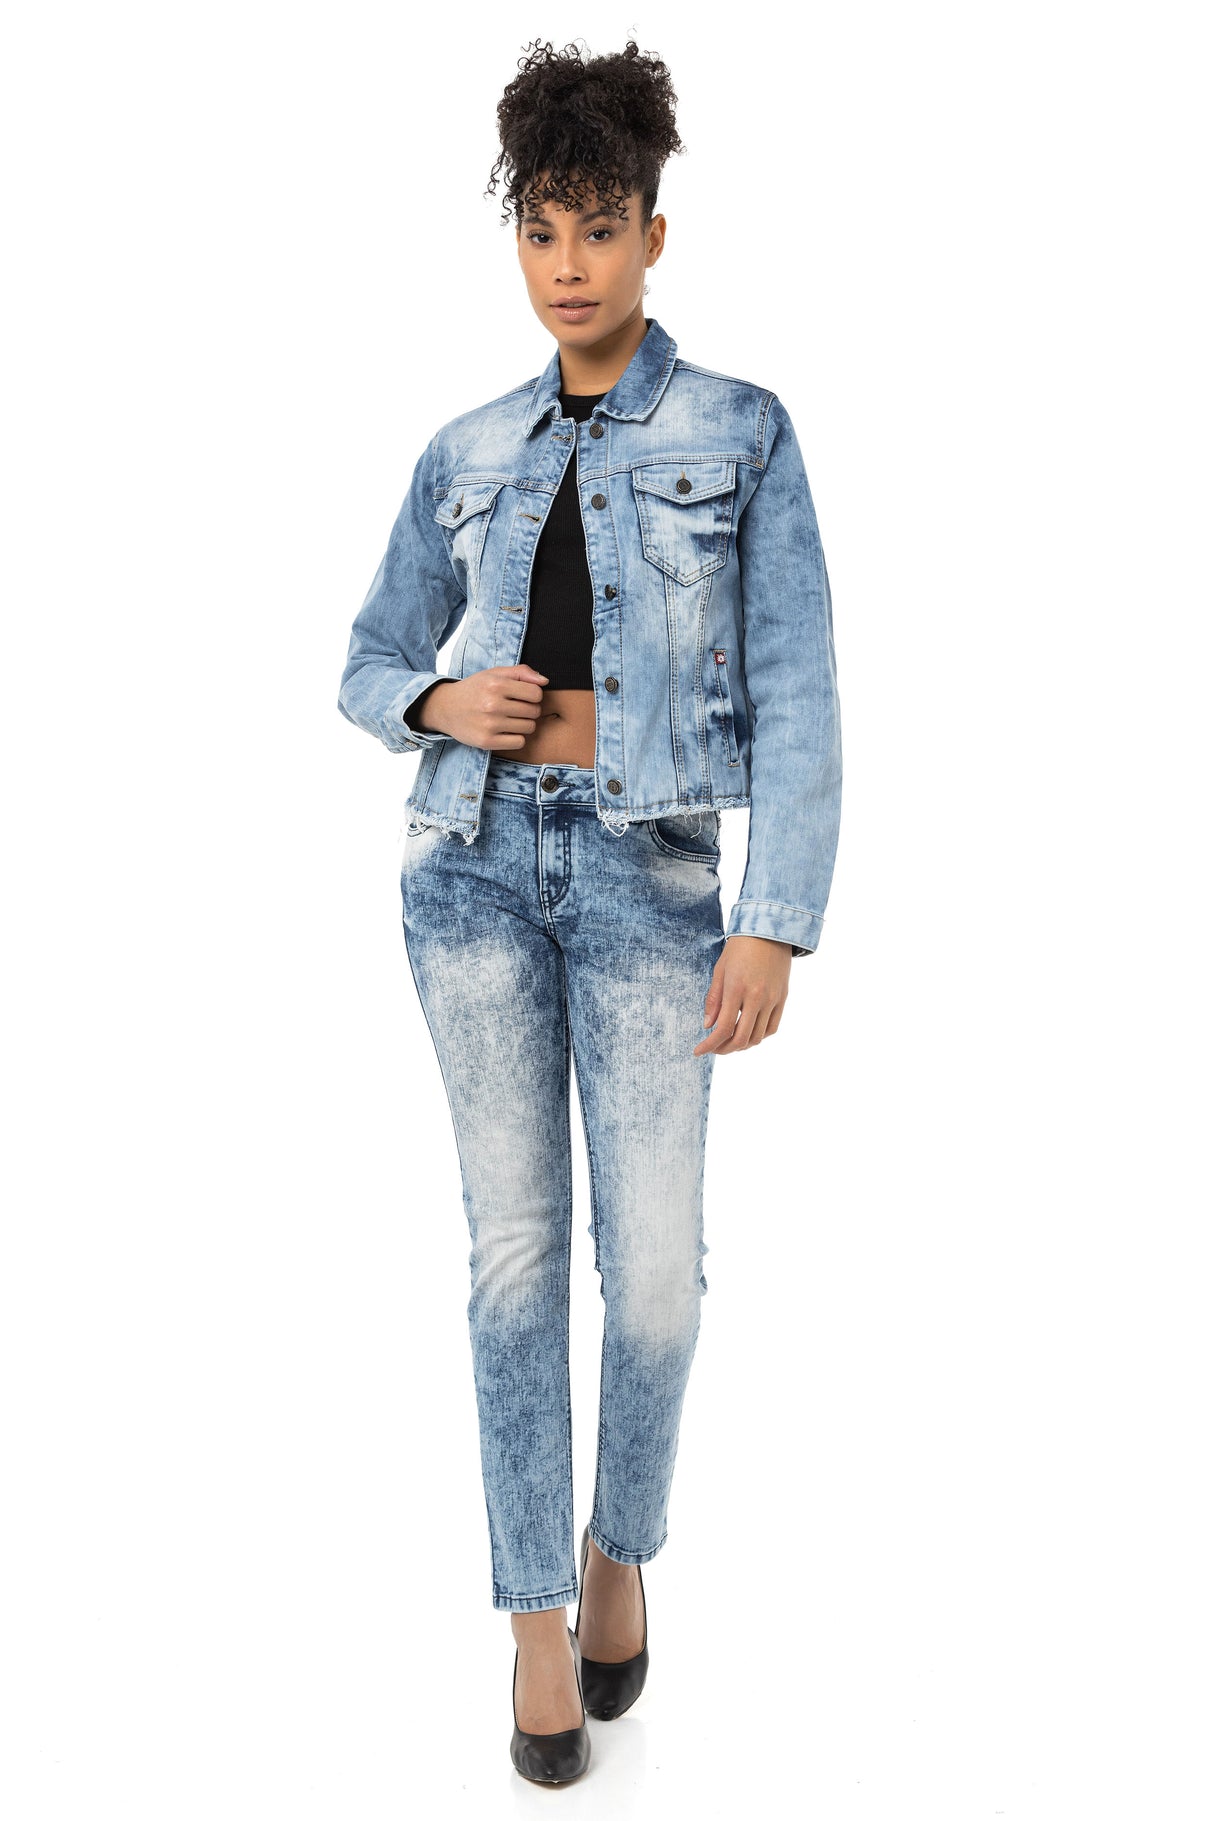 WD459 Slim-Fit DamesJeans in een moderne Look